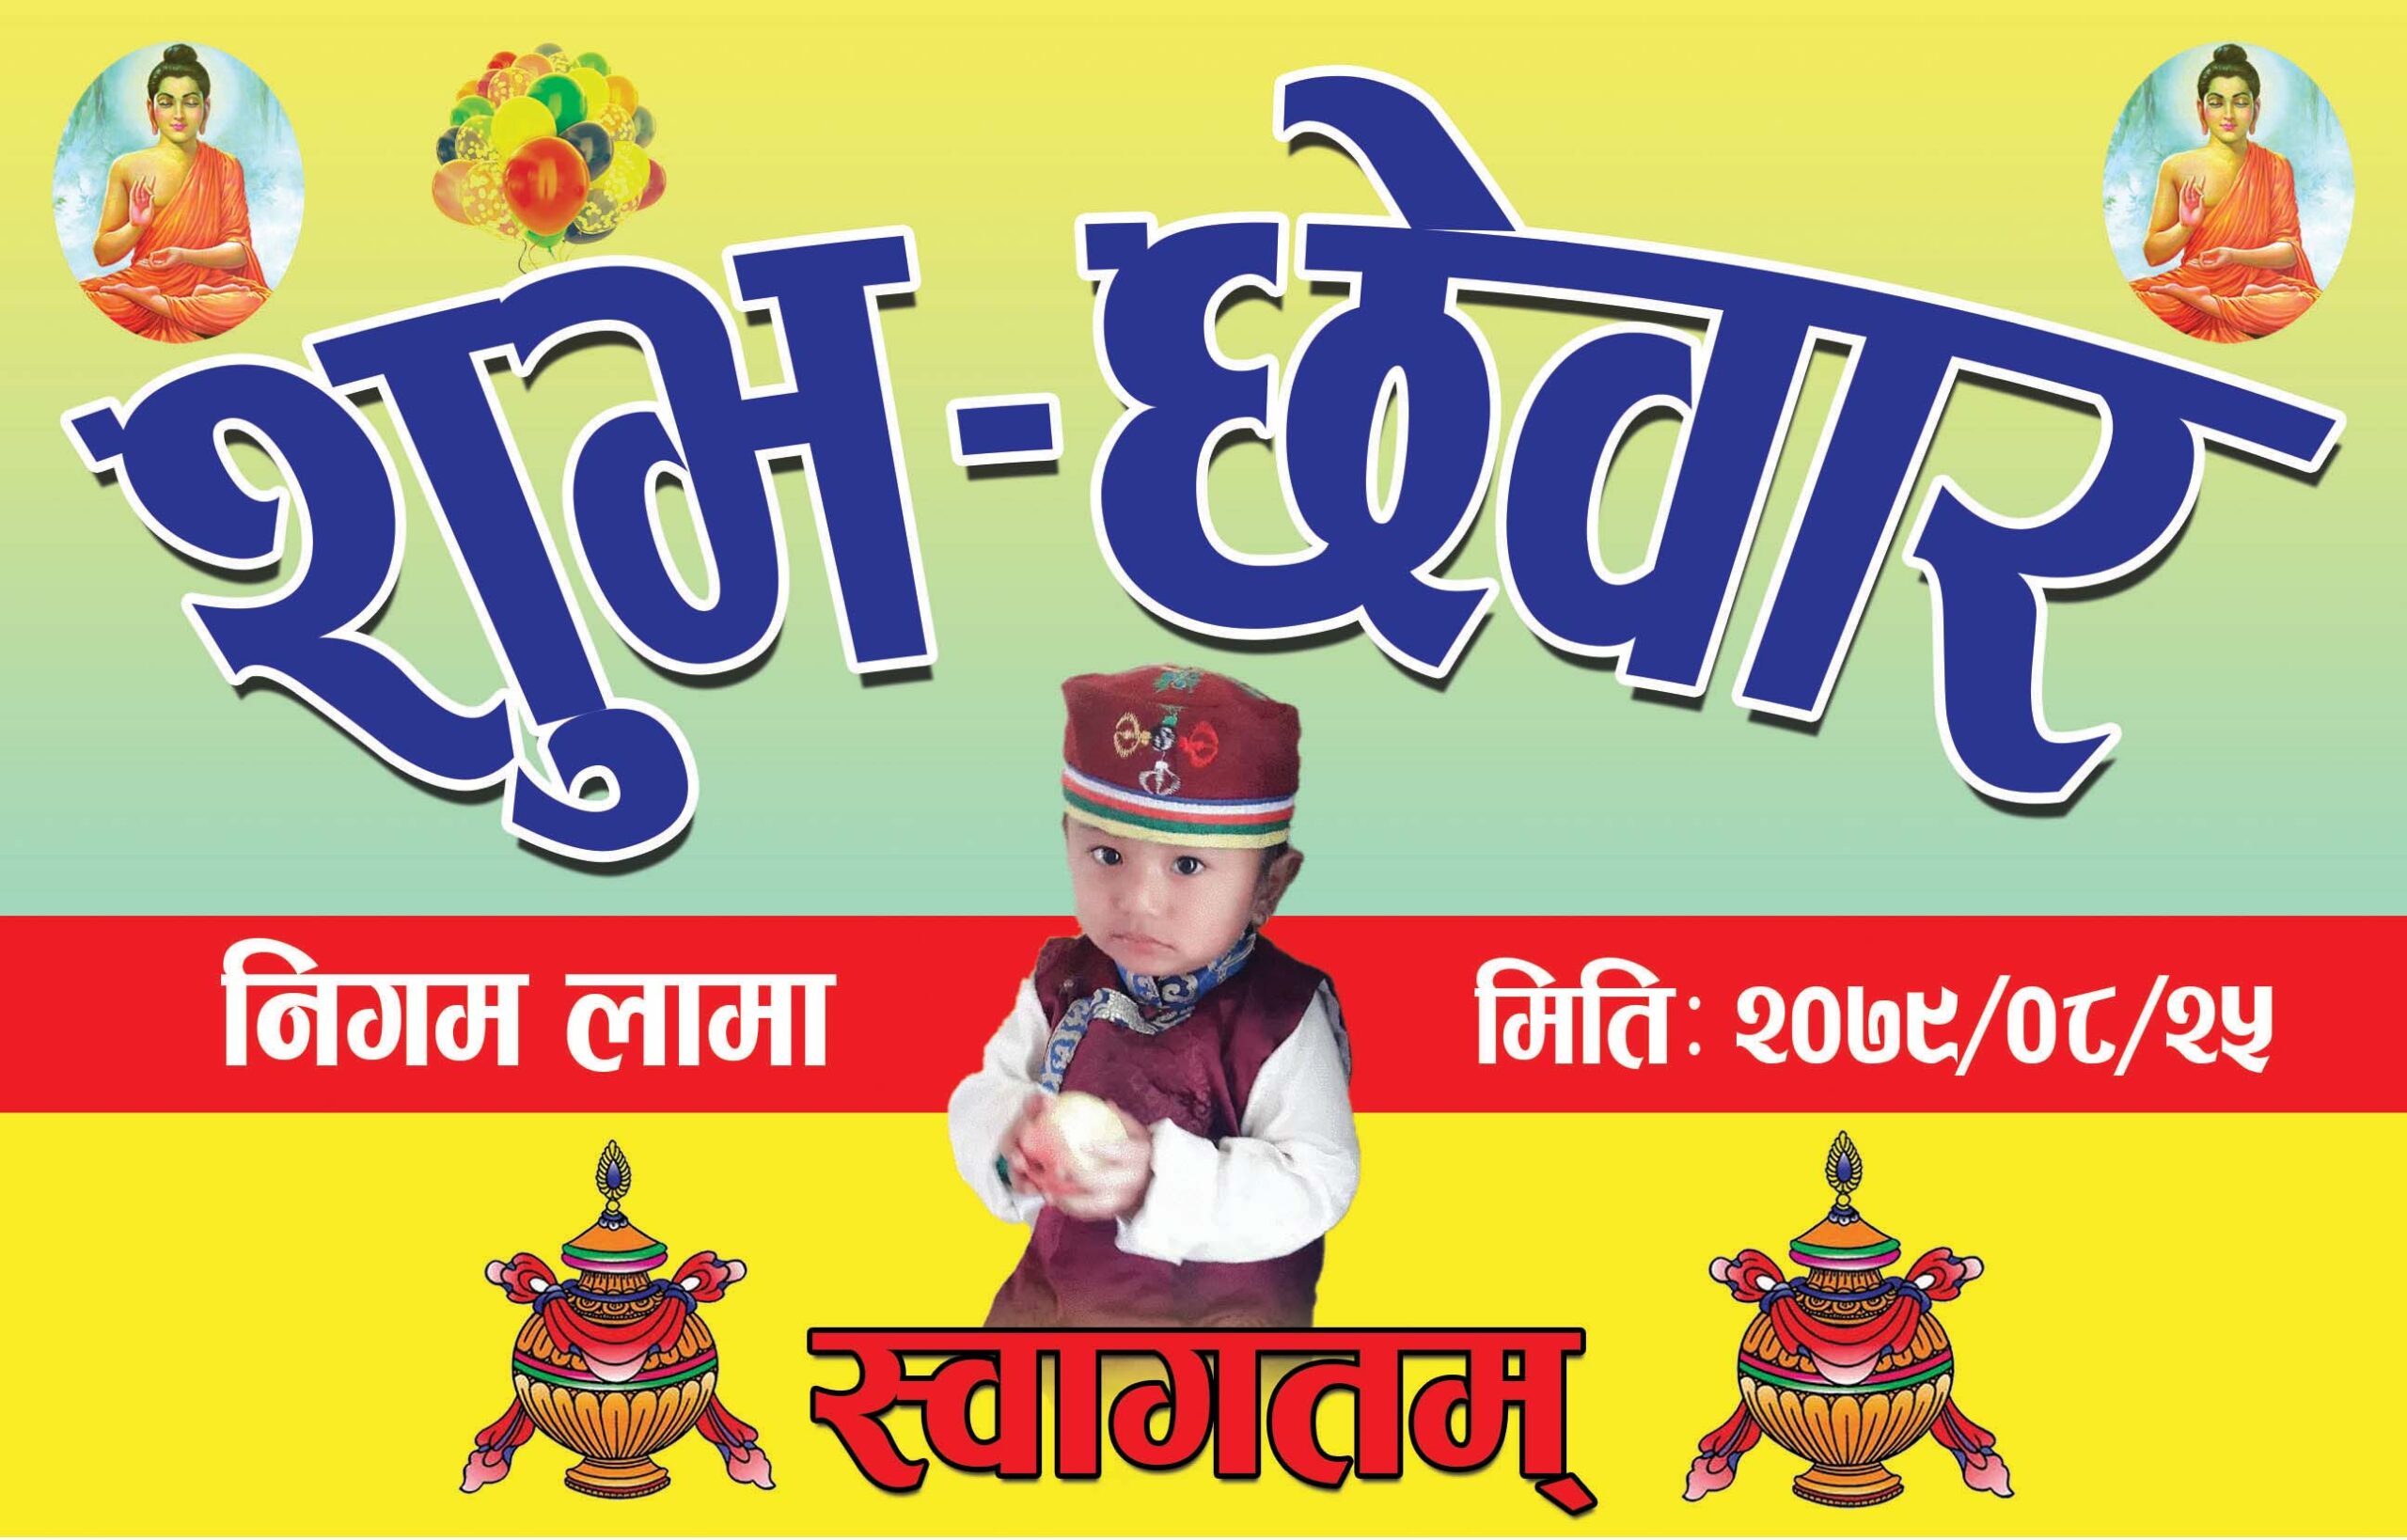 suva chhewar banner design in nepali-buddhist